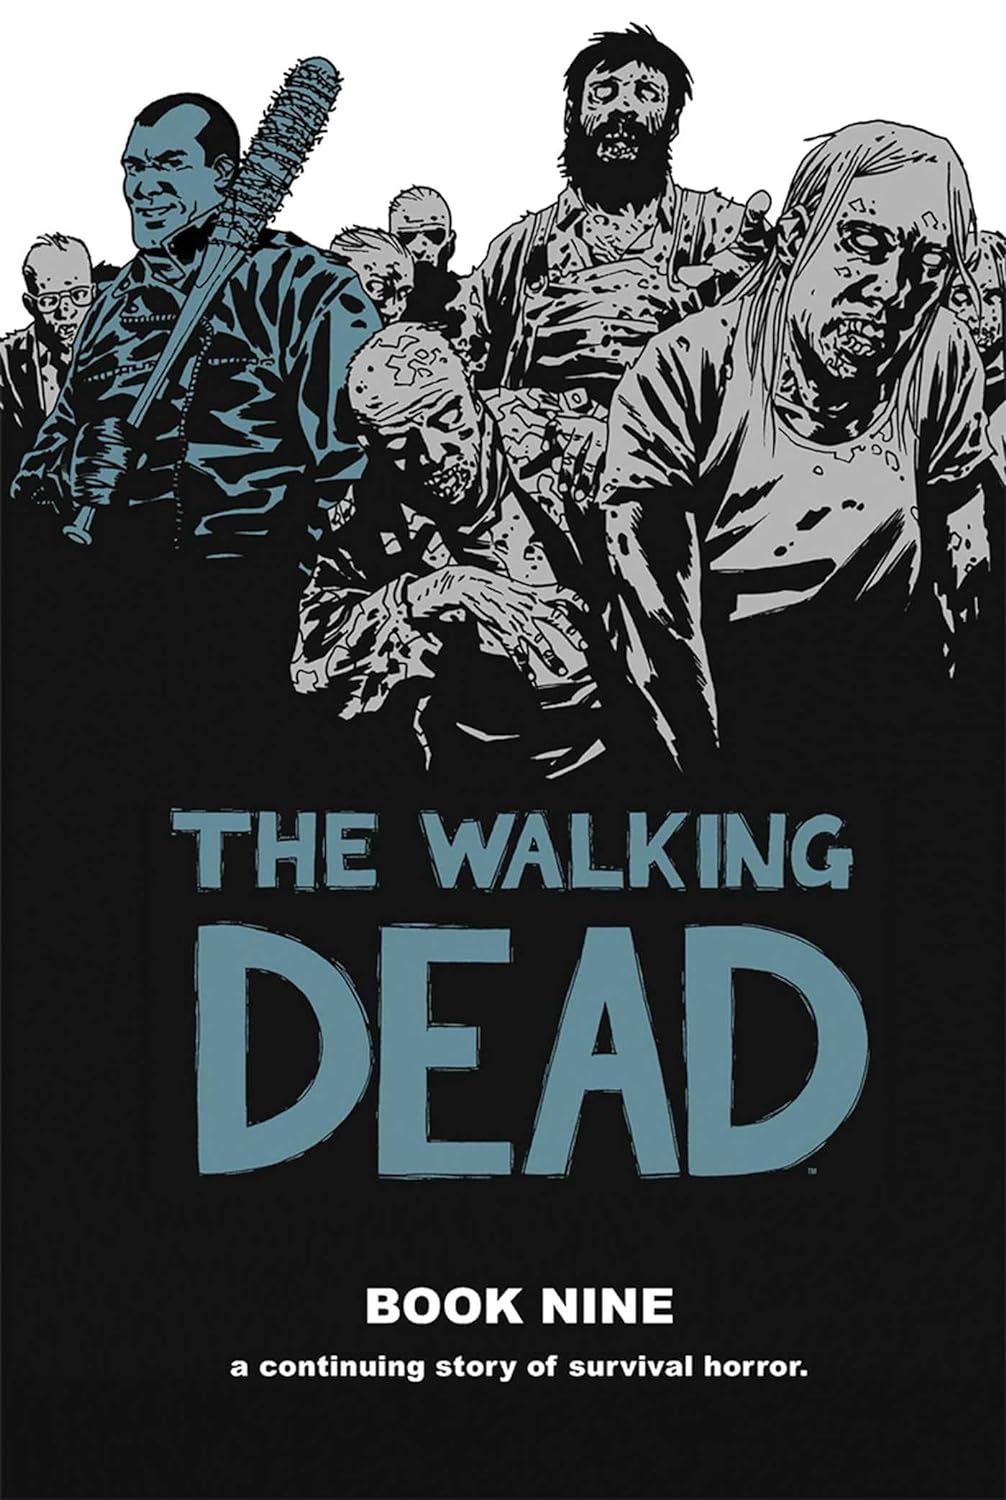 The Walking Dead Book Nine Hardcover 2013